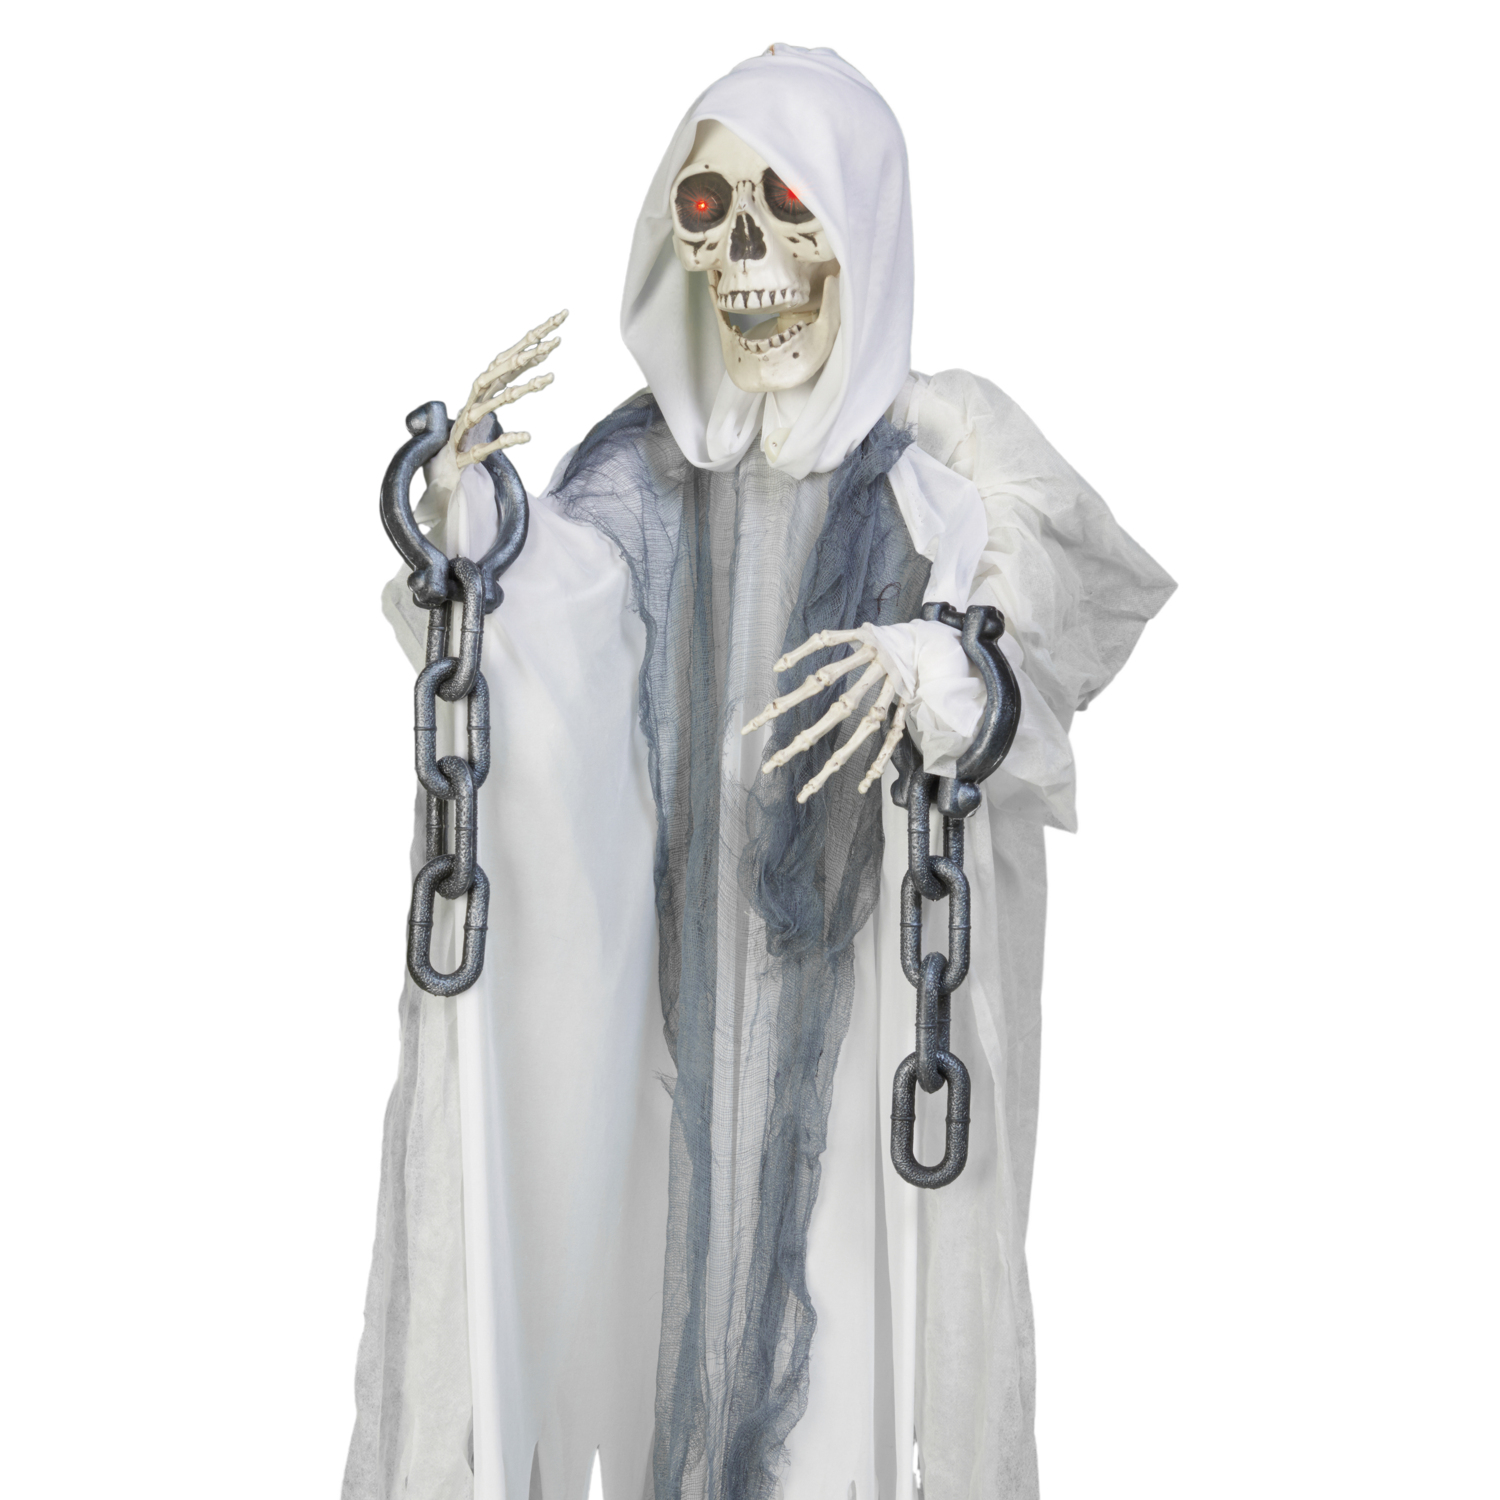 Handcuffed Reaper Decoration - Silver Image 2